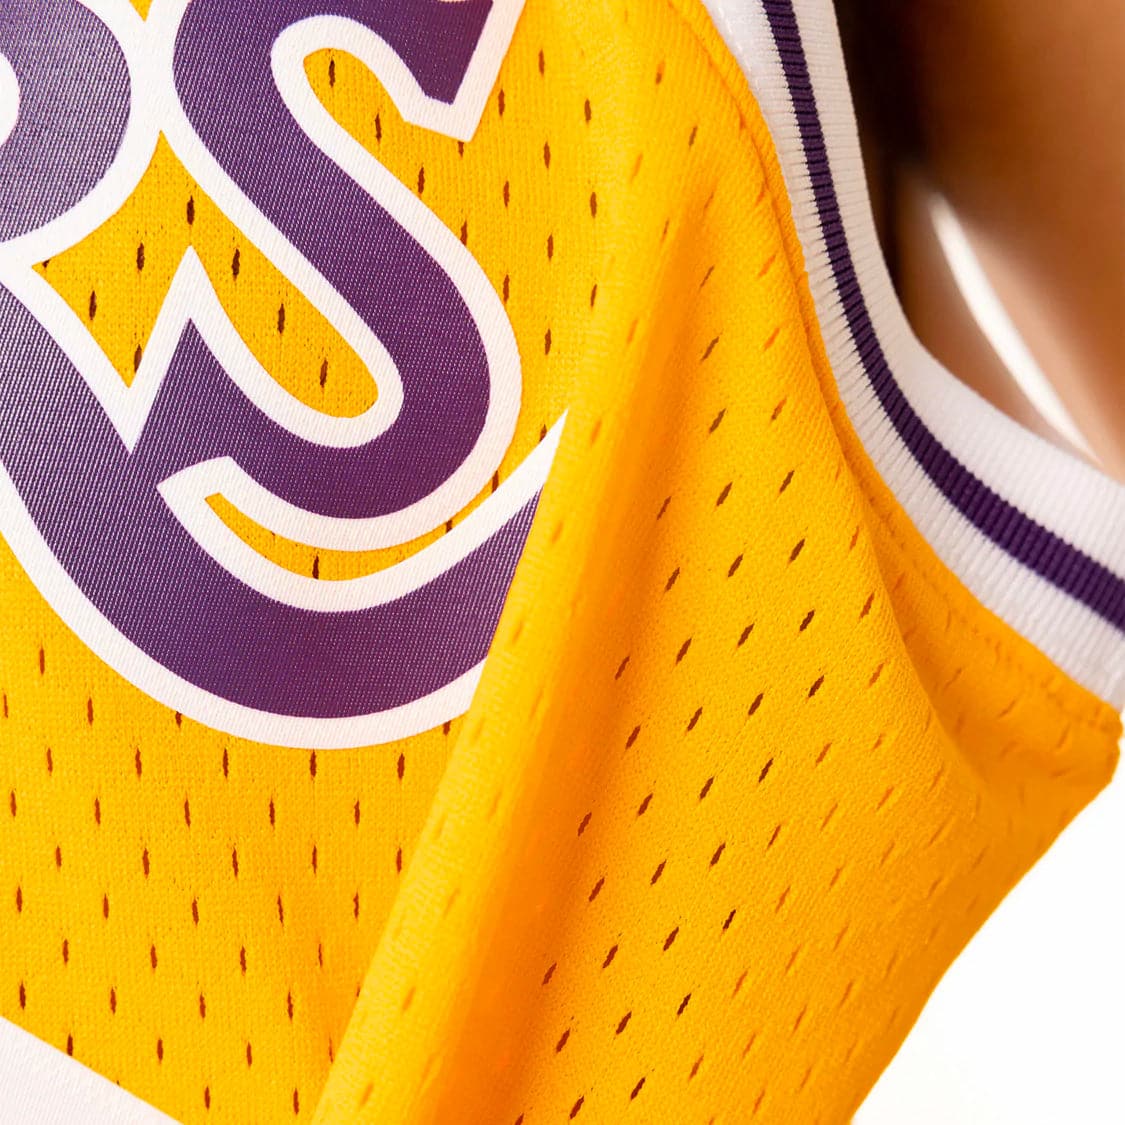 Dennis Rodman Los Angeles Lakers Mitchell & Ness Hardwood Classics Swingman  Jersey - Gold